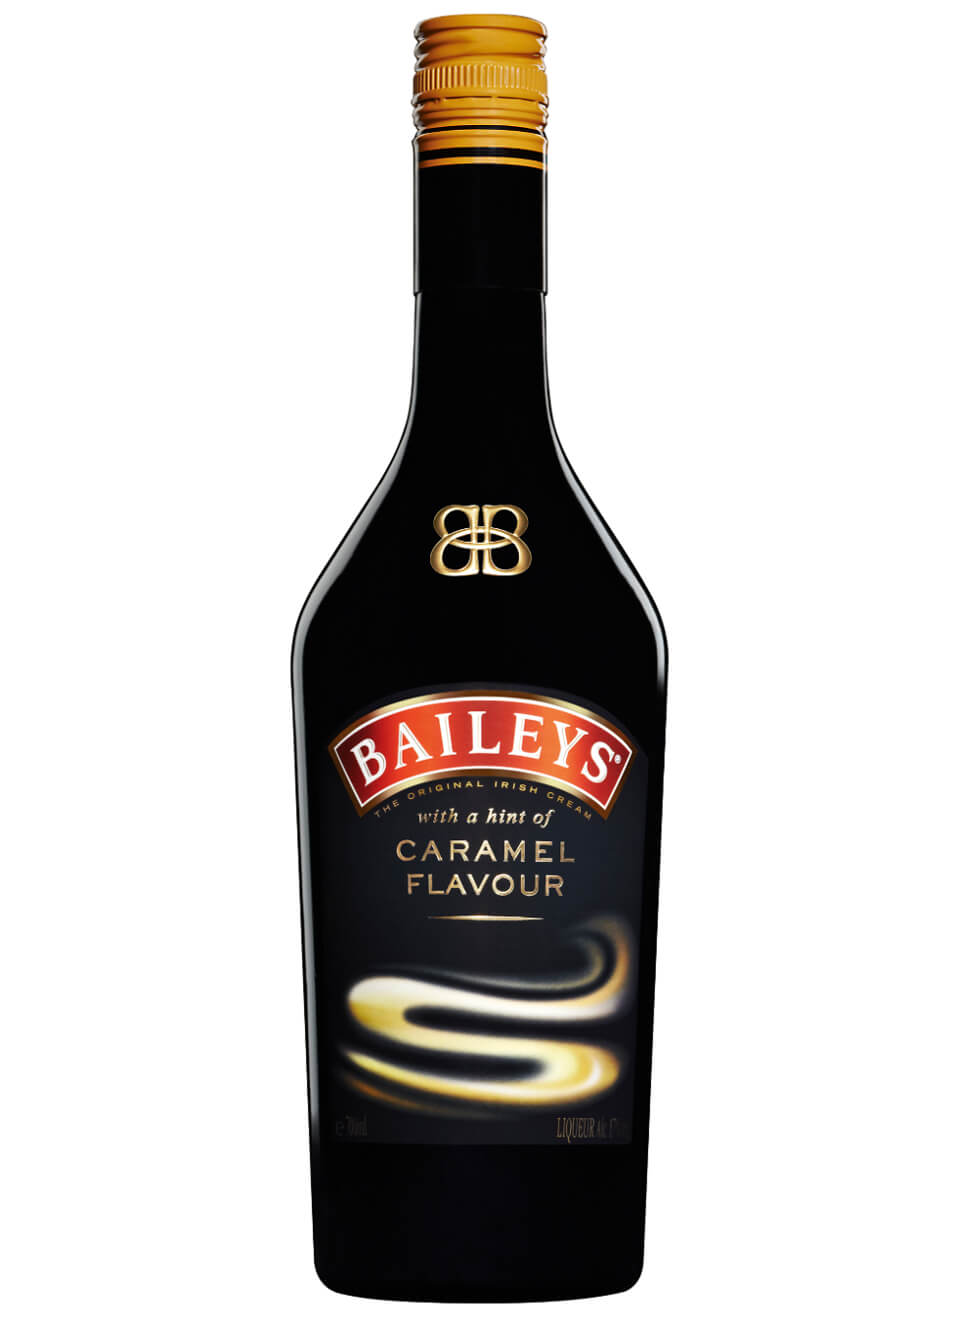 Baileys Caramel Likör 0,7 L günstig kaufen | Spirituosenworld.de ...